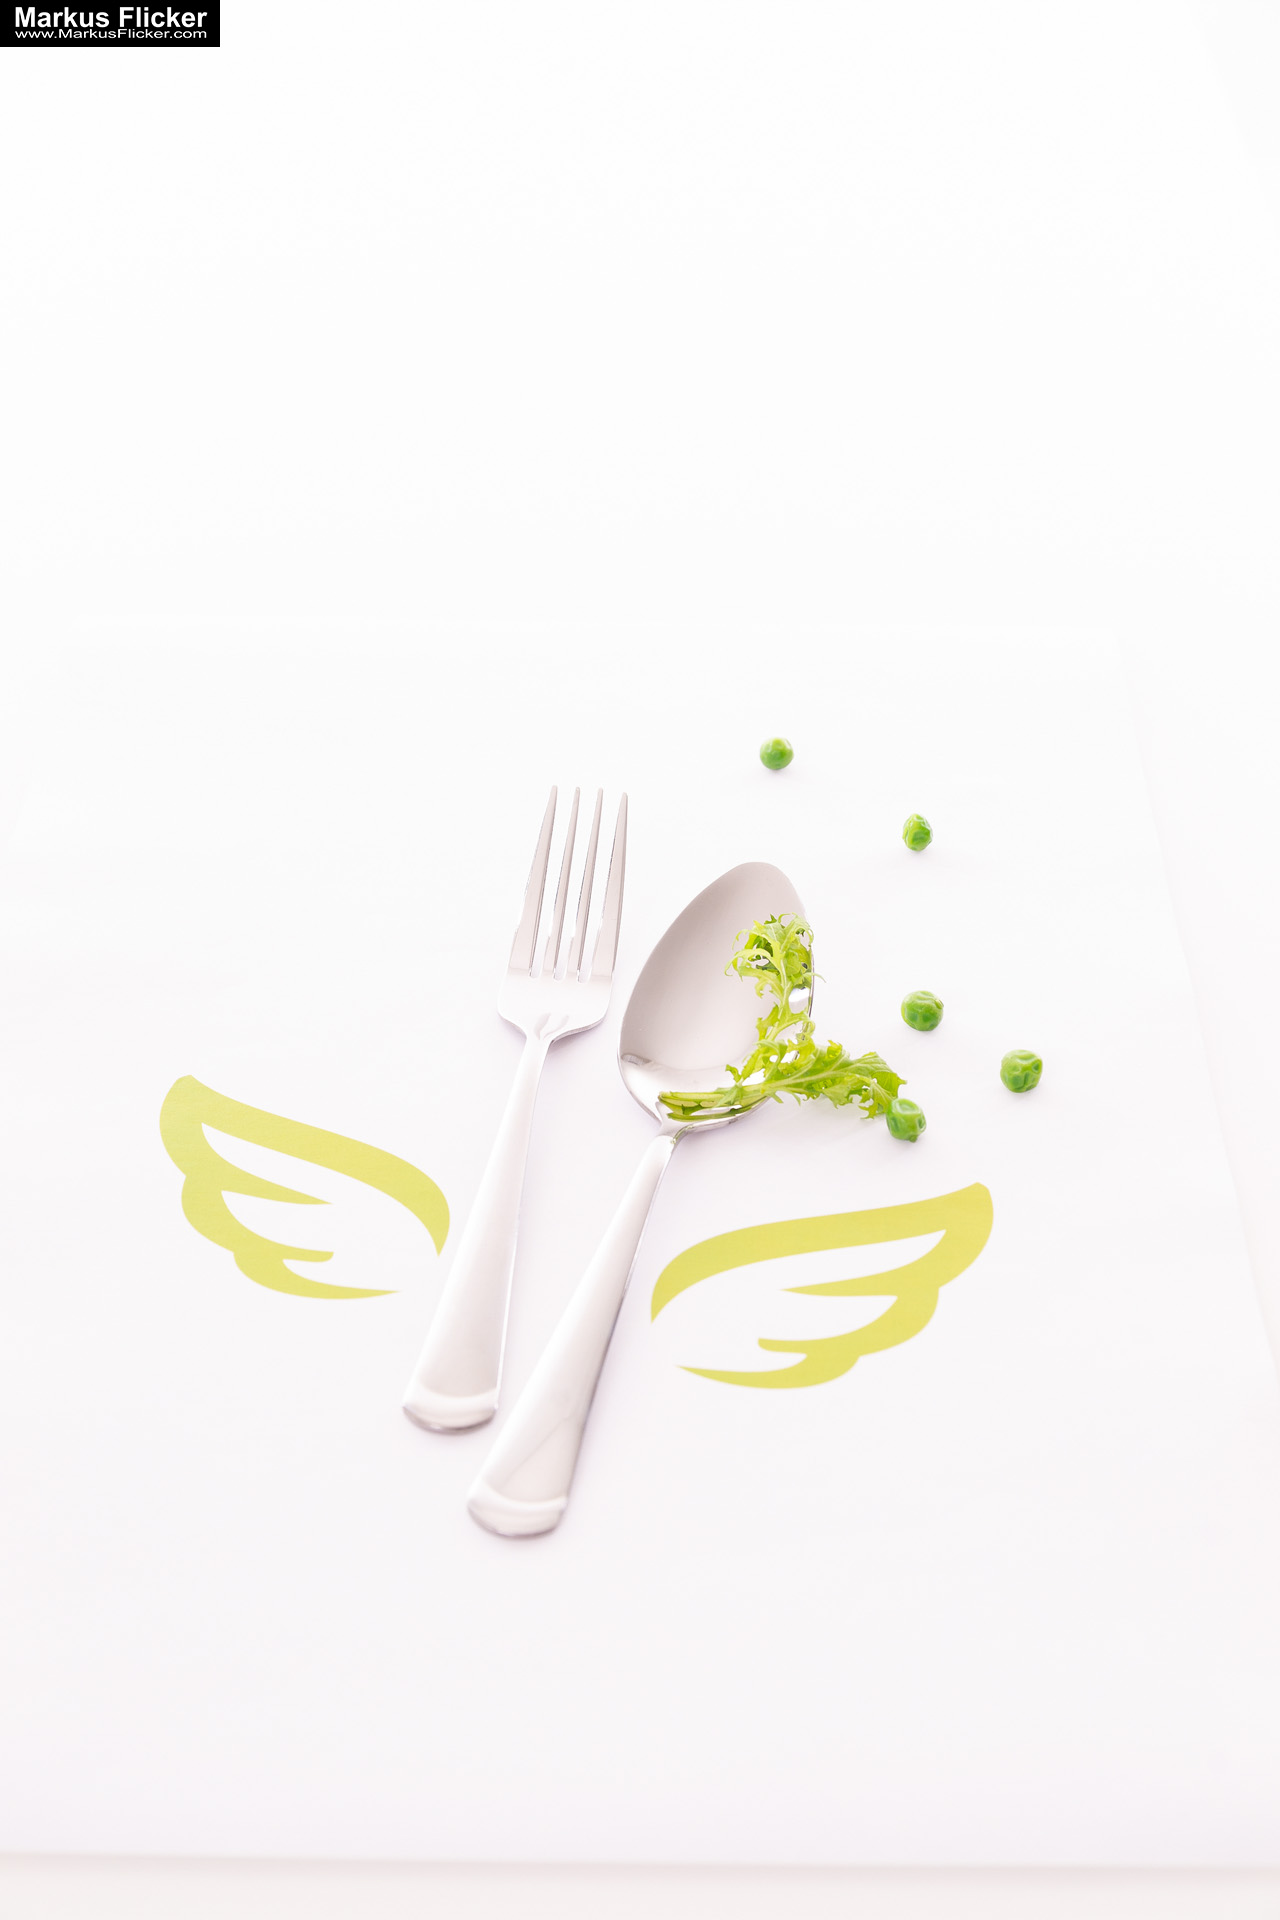 Speisen Lebensmittel Tabletop Studio Imagefotos Produktfotos Chutney Gemüse Fleisch